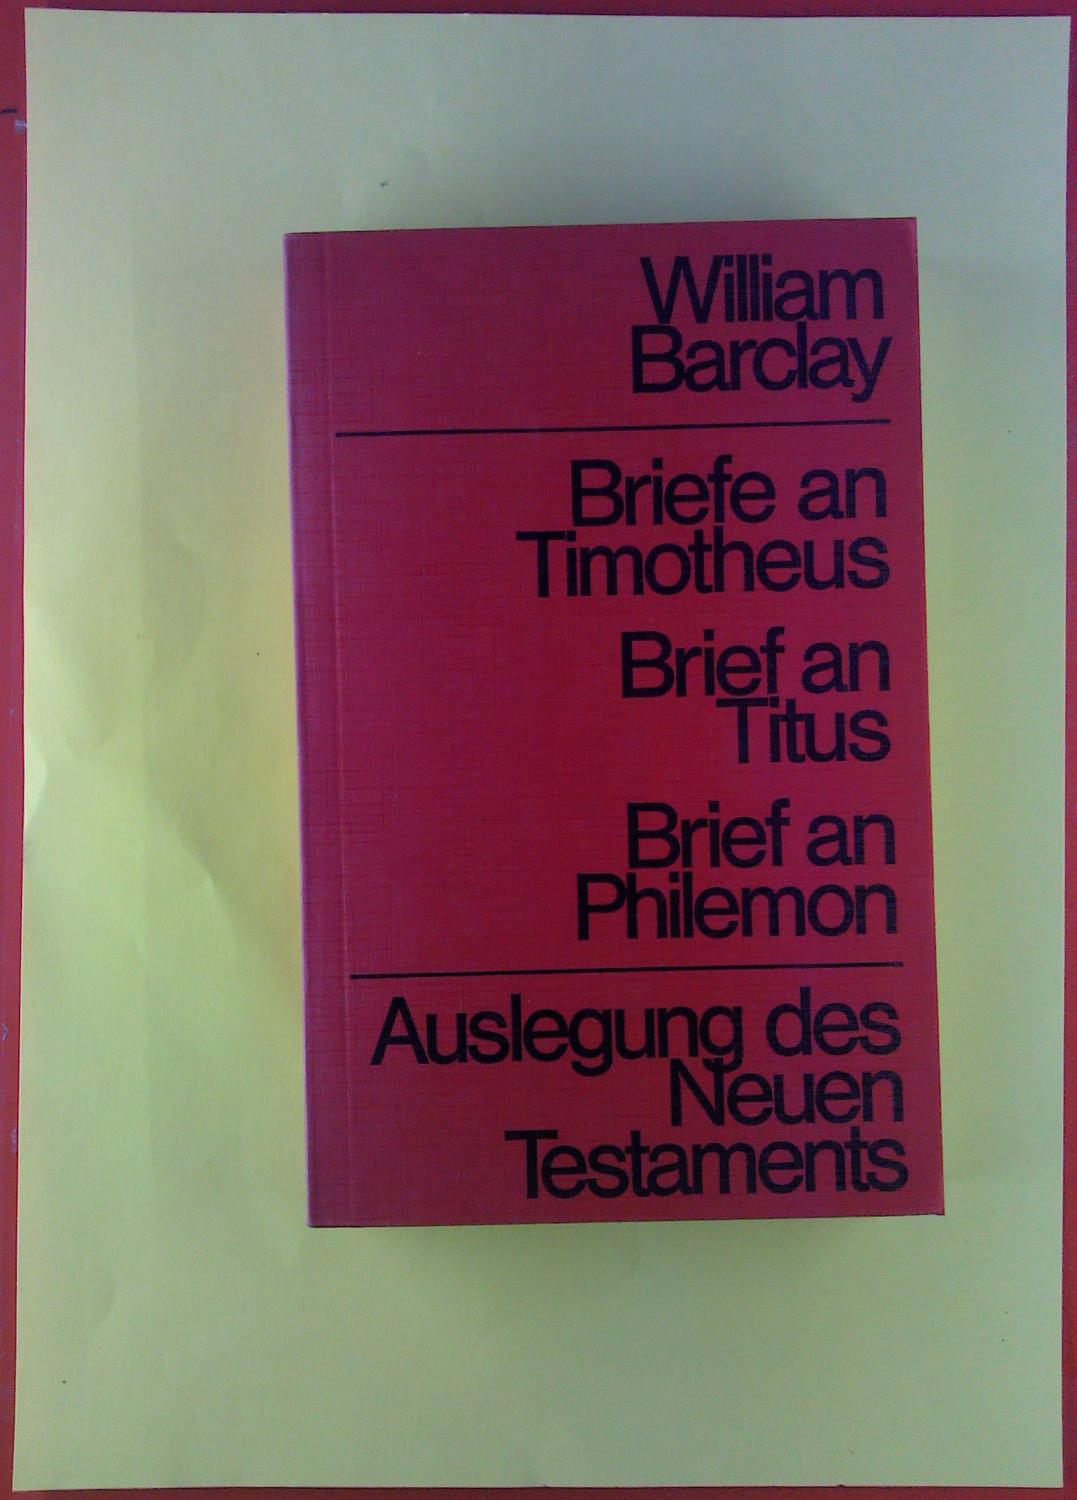 Briefe an Timotheus / Brief an Titus / Brief an Philemon. Auslegung des Neuen Testaments. - William Barclay